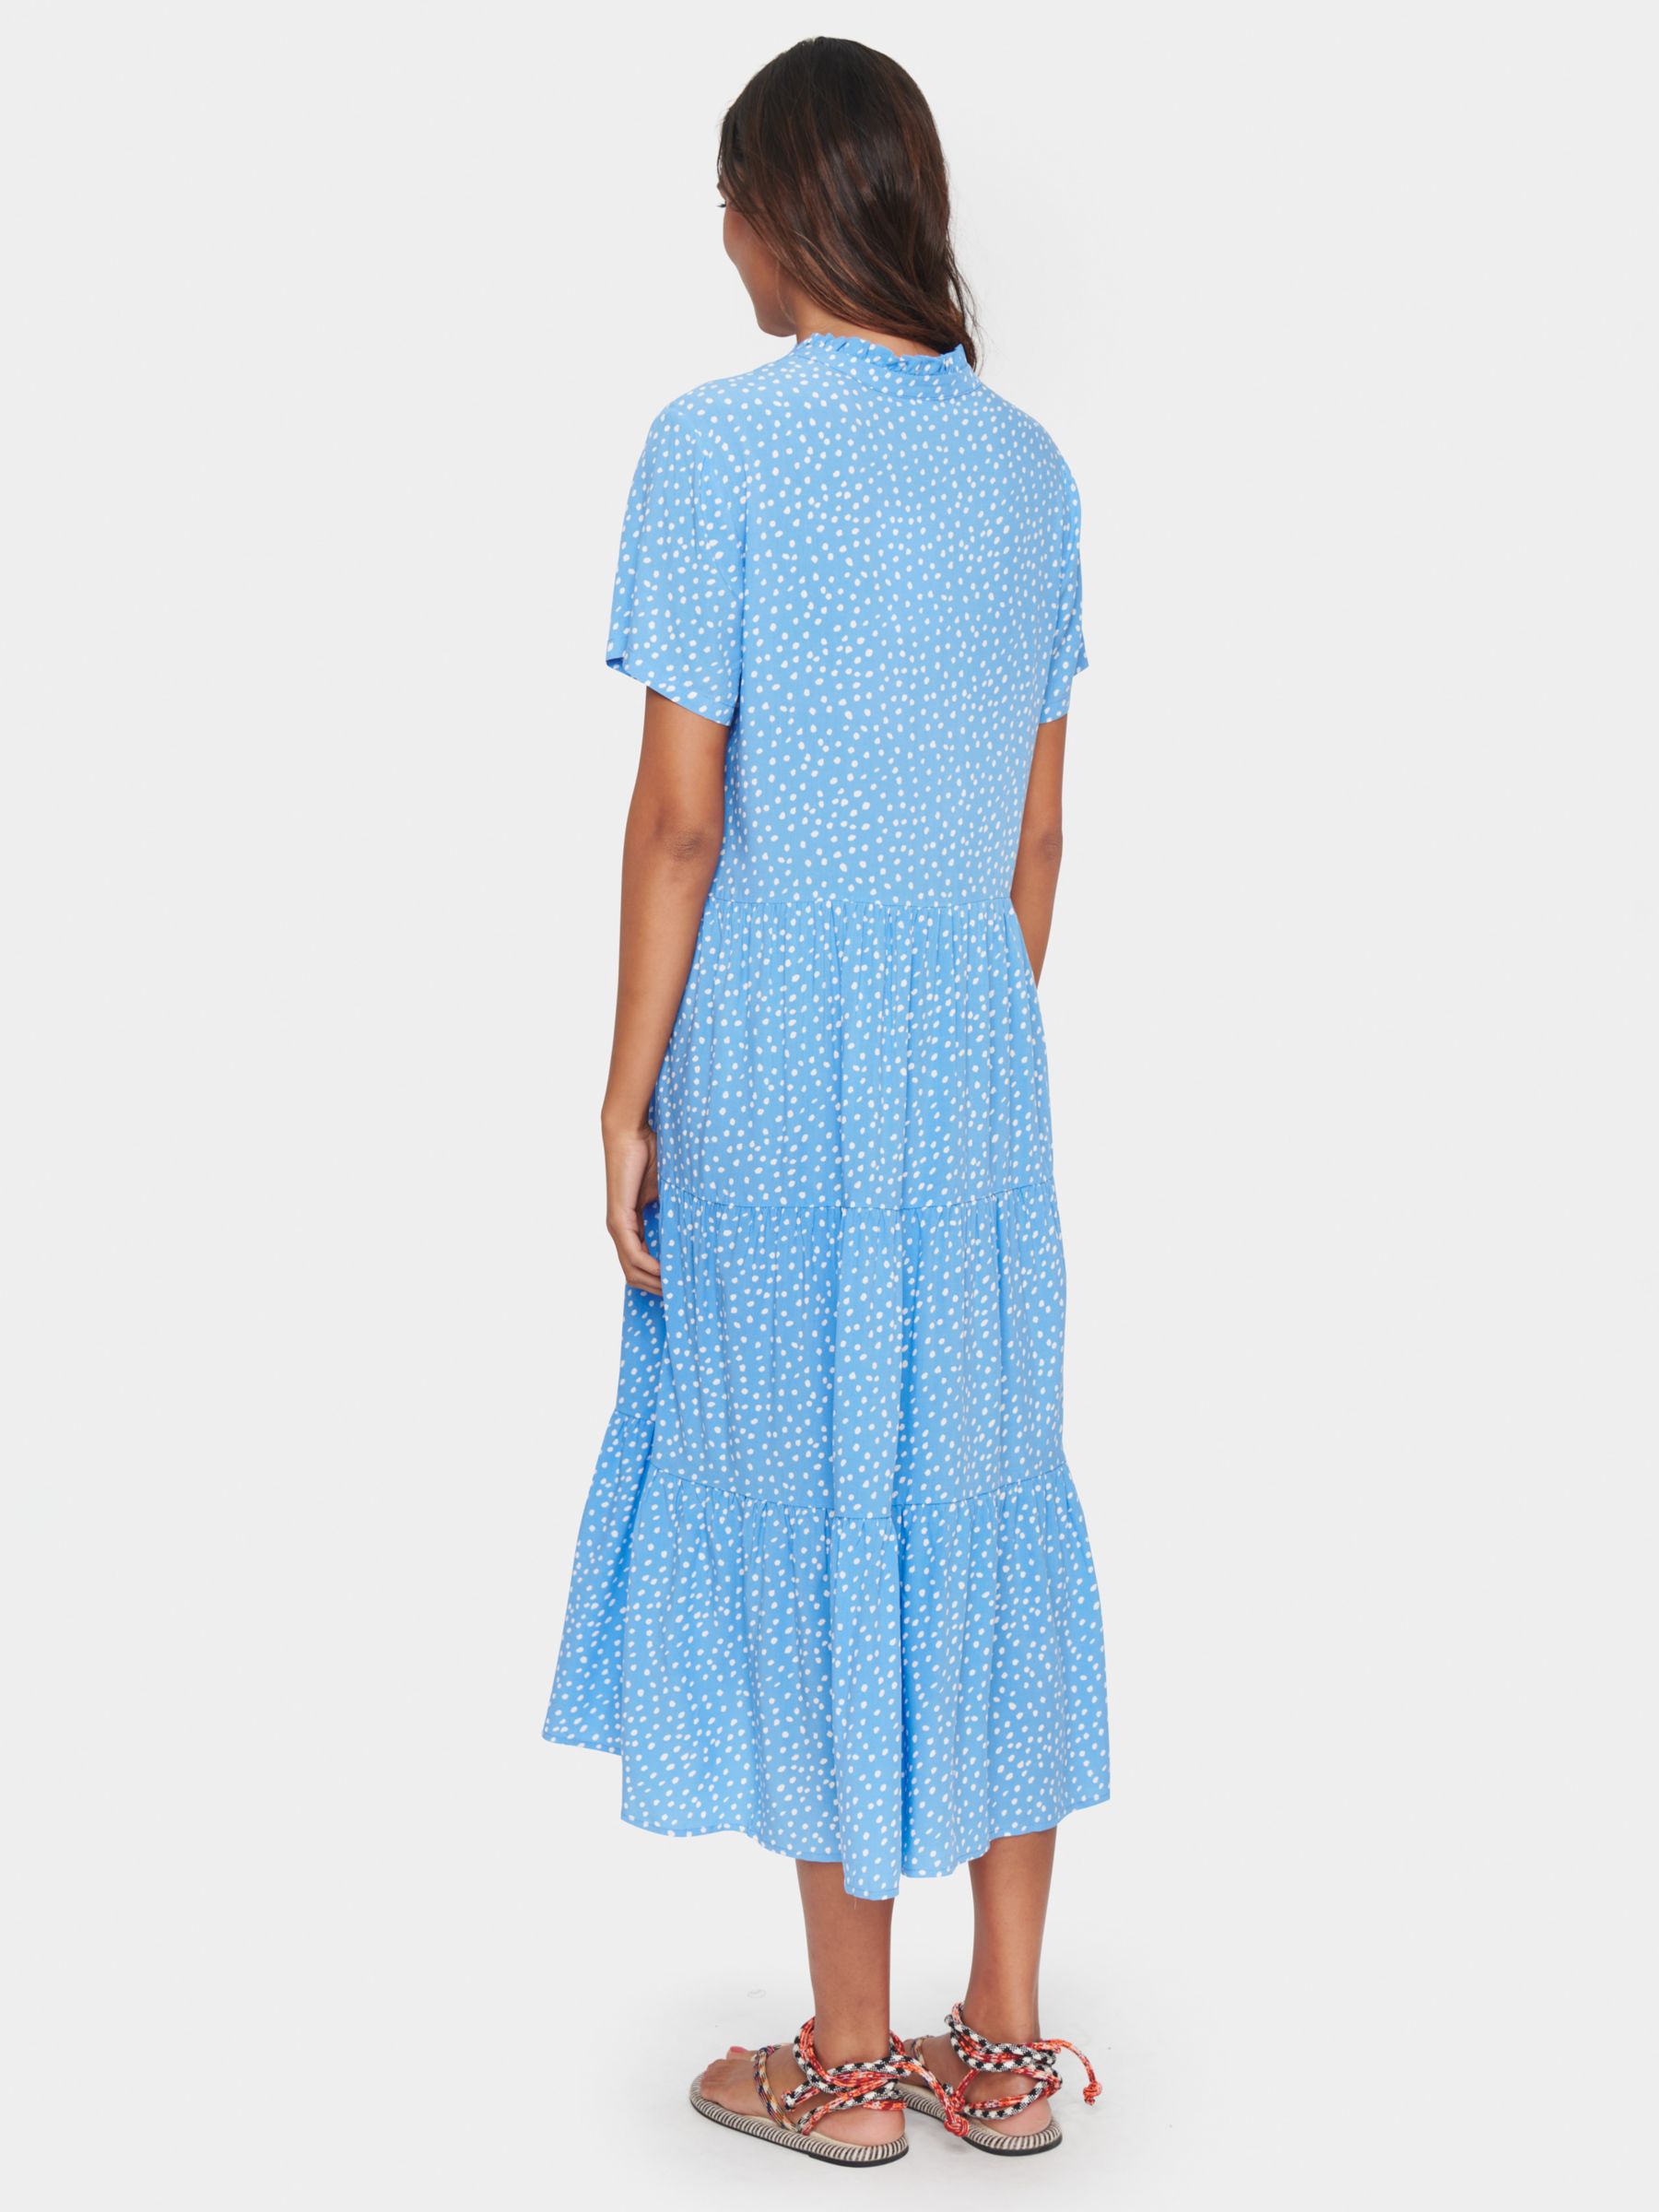 Saint Tropez Eda Ditsy Spot Print Tiered Midi Dress, Blue/White, XS